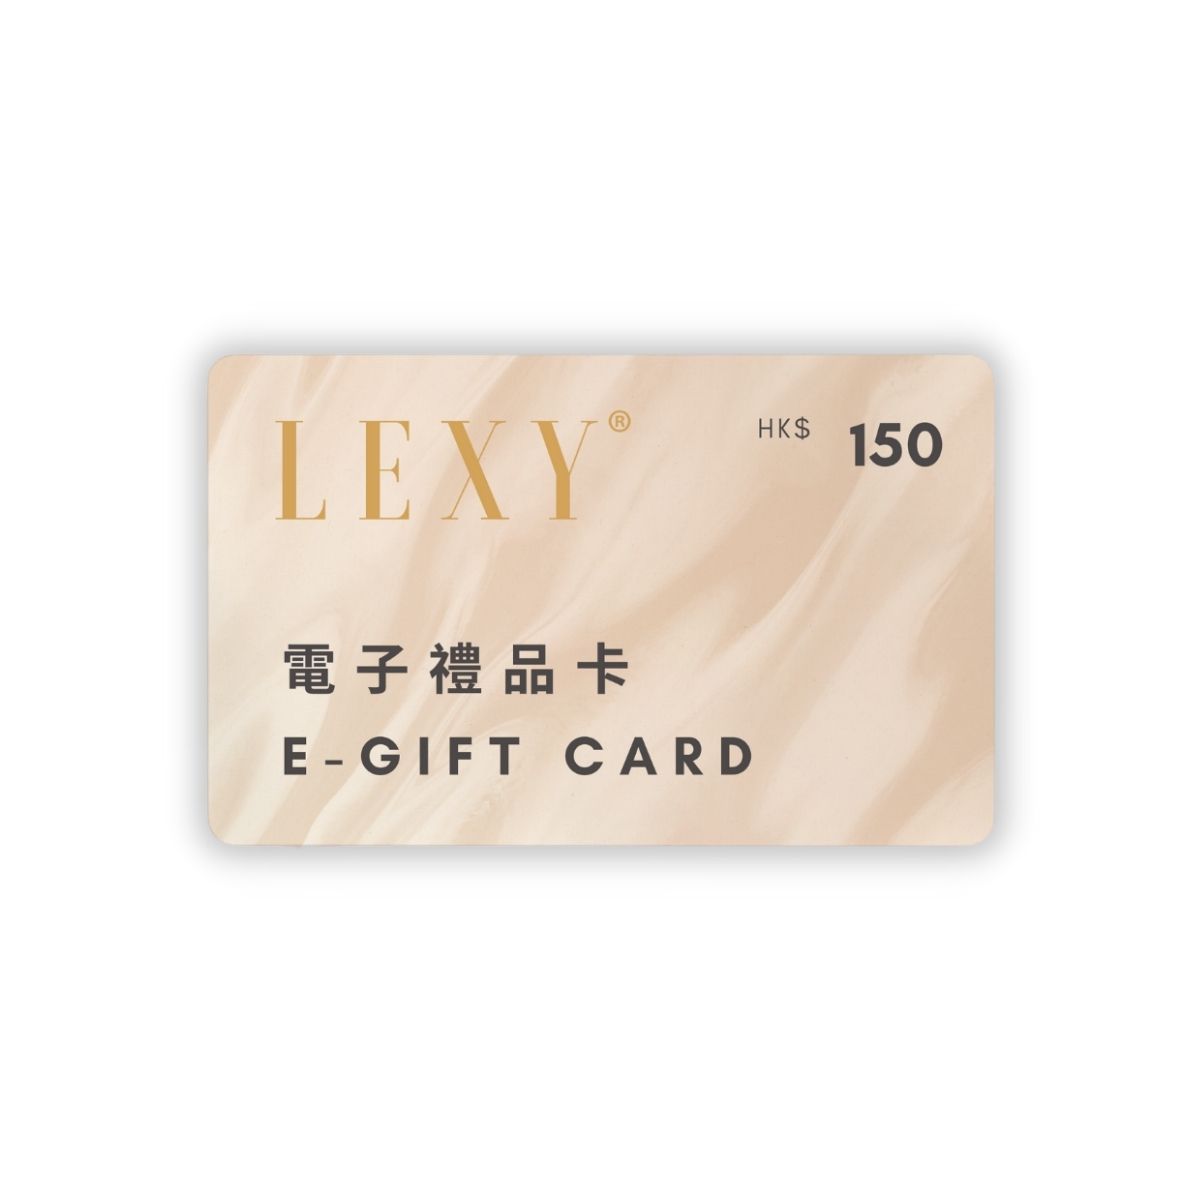 LEXY ® LEXY ® e-Gift Cards 電子禮品卡 Gift Cards HK$150.00 購買